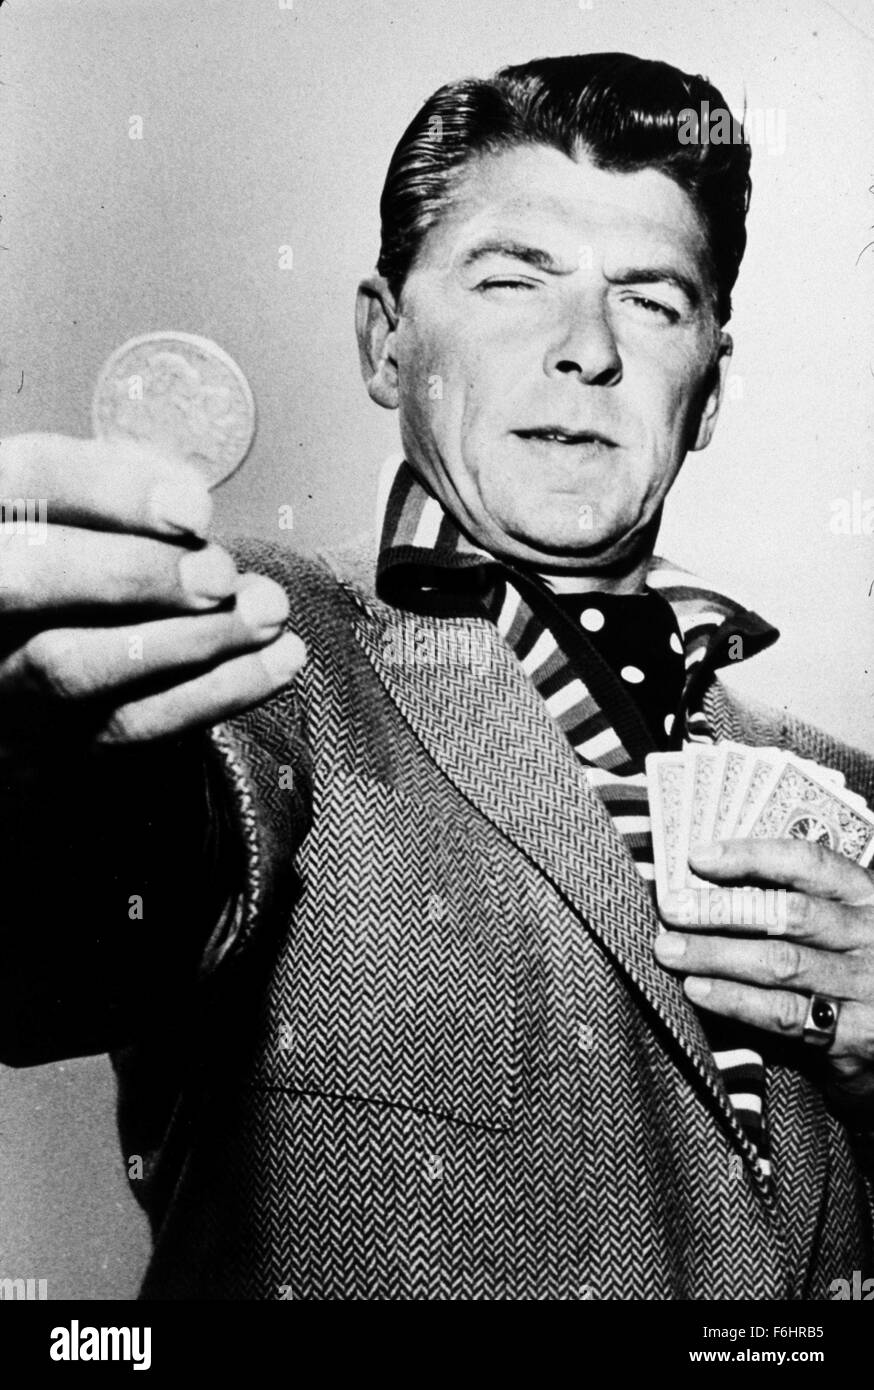 1958, le titre du film : GENERAL ELECTRIC THEATRE, Studio : CBS, Photo : Ronald Reagan, coins, d'examiner, de Tweed veste, cartes. (Crédit Image : SNAP) Banque D'Images